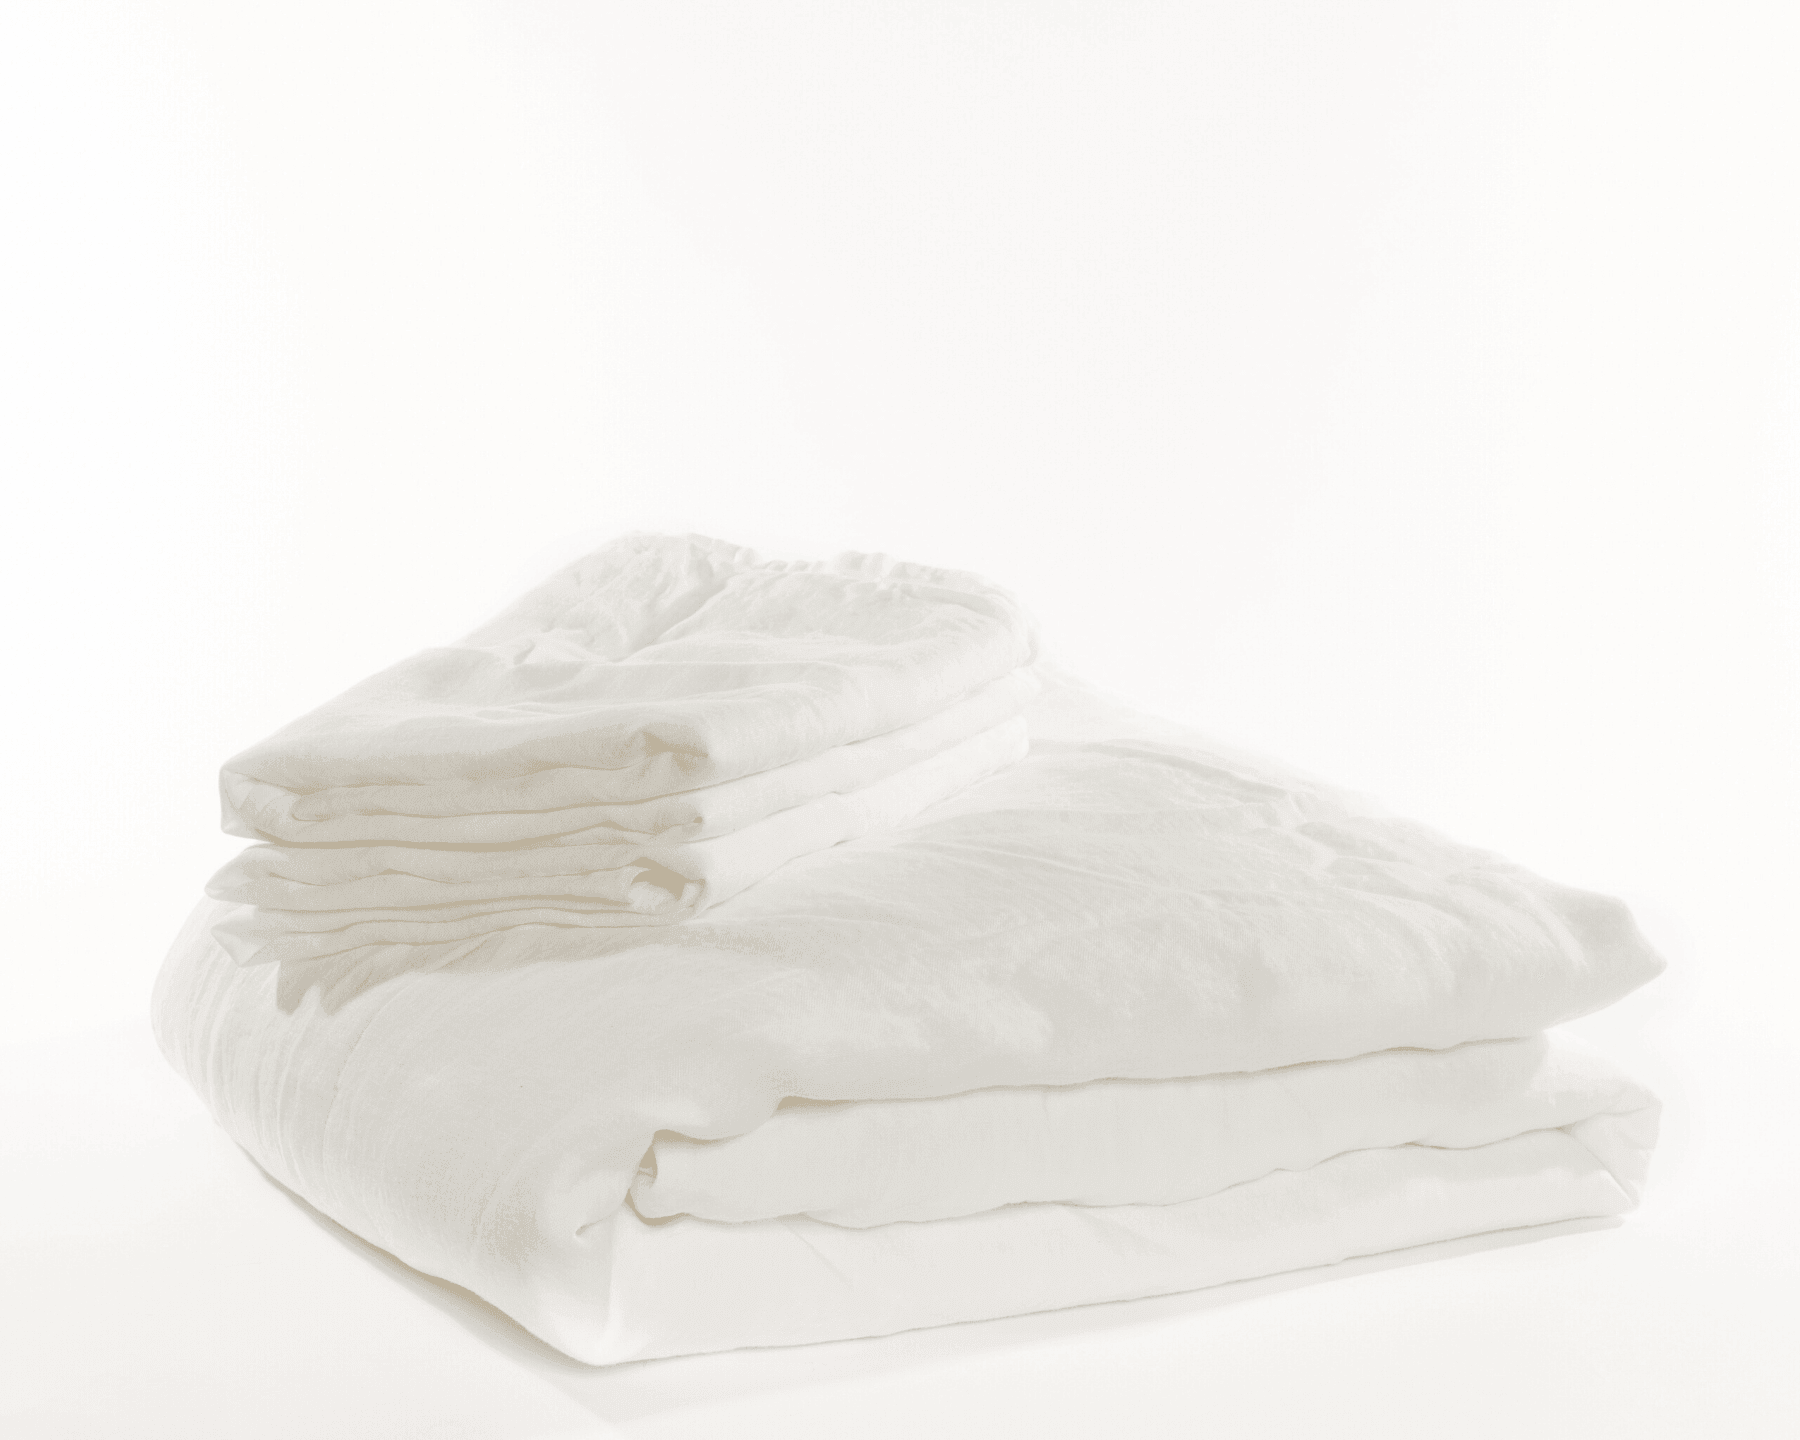 White organic European linen duvet covers set with two matching pillowcases - Hvid (white)